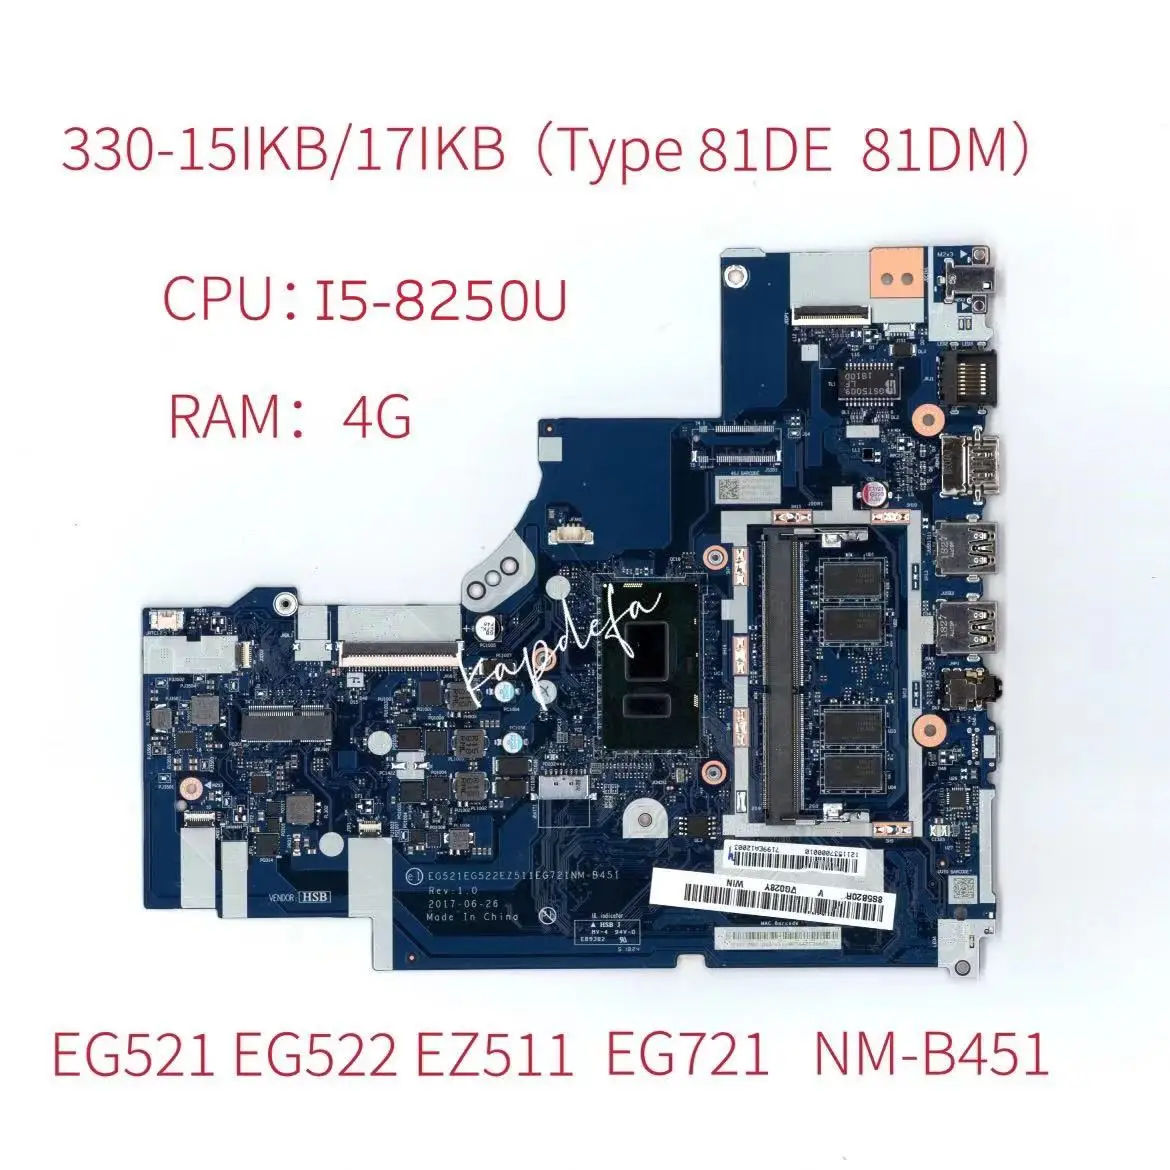 

NM-B451 Para Lenovo Ideapad 330-15IKB/17IKB Laptop Motherboard Type 81DE CPU:I5-8250U RAM:4G FRU: 5B20R19867 5B20R19914